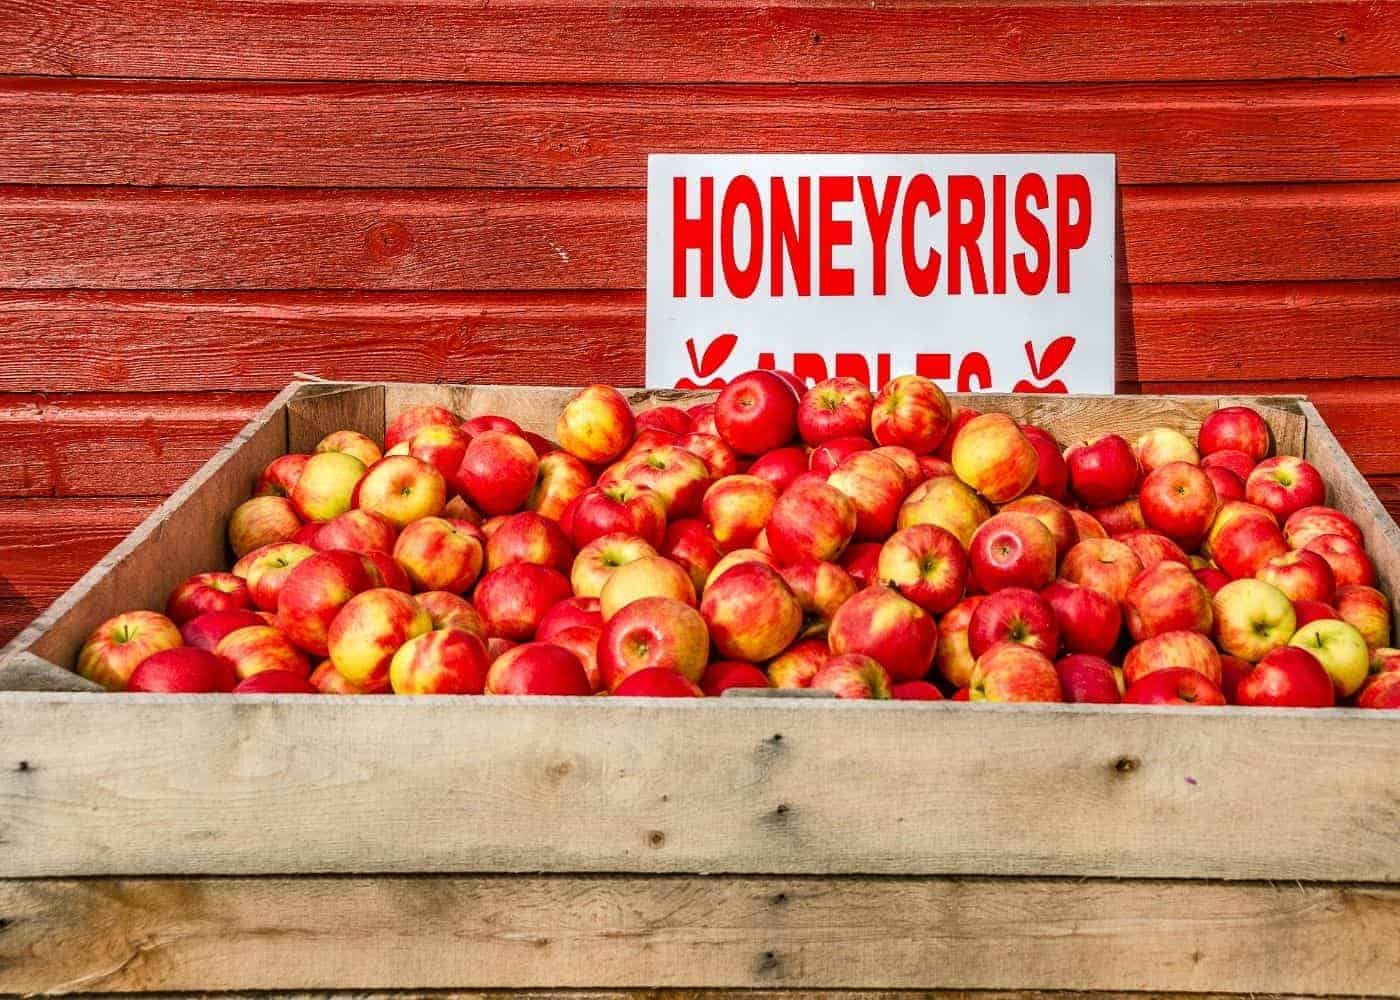 Honeycrisp apples in a crate at a farm market store